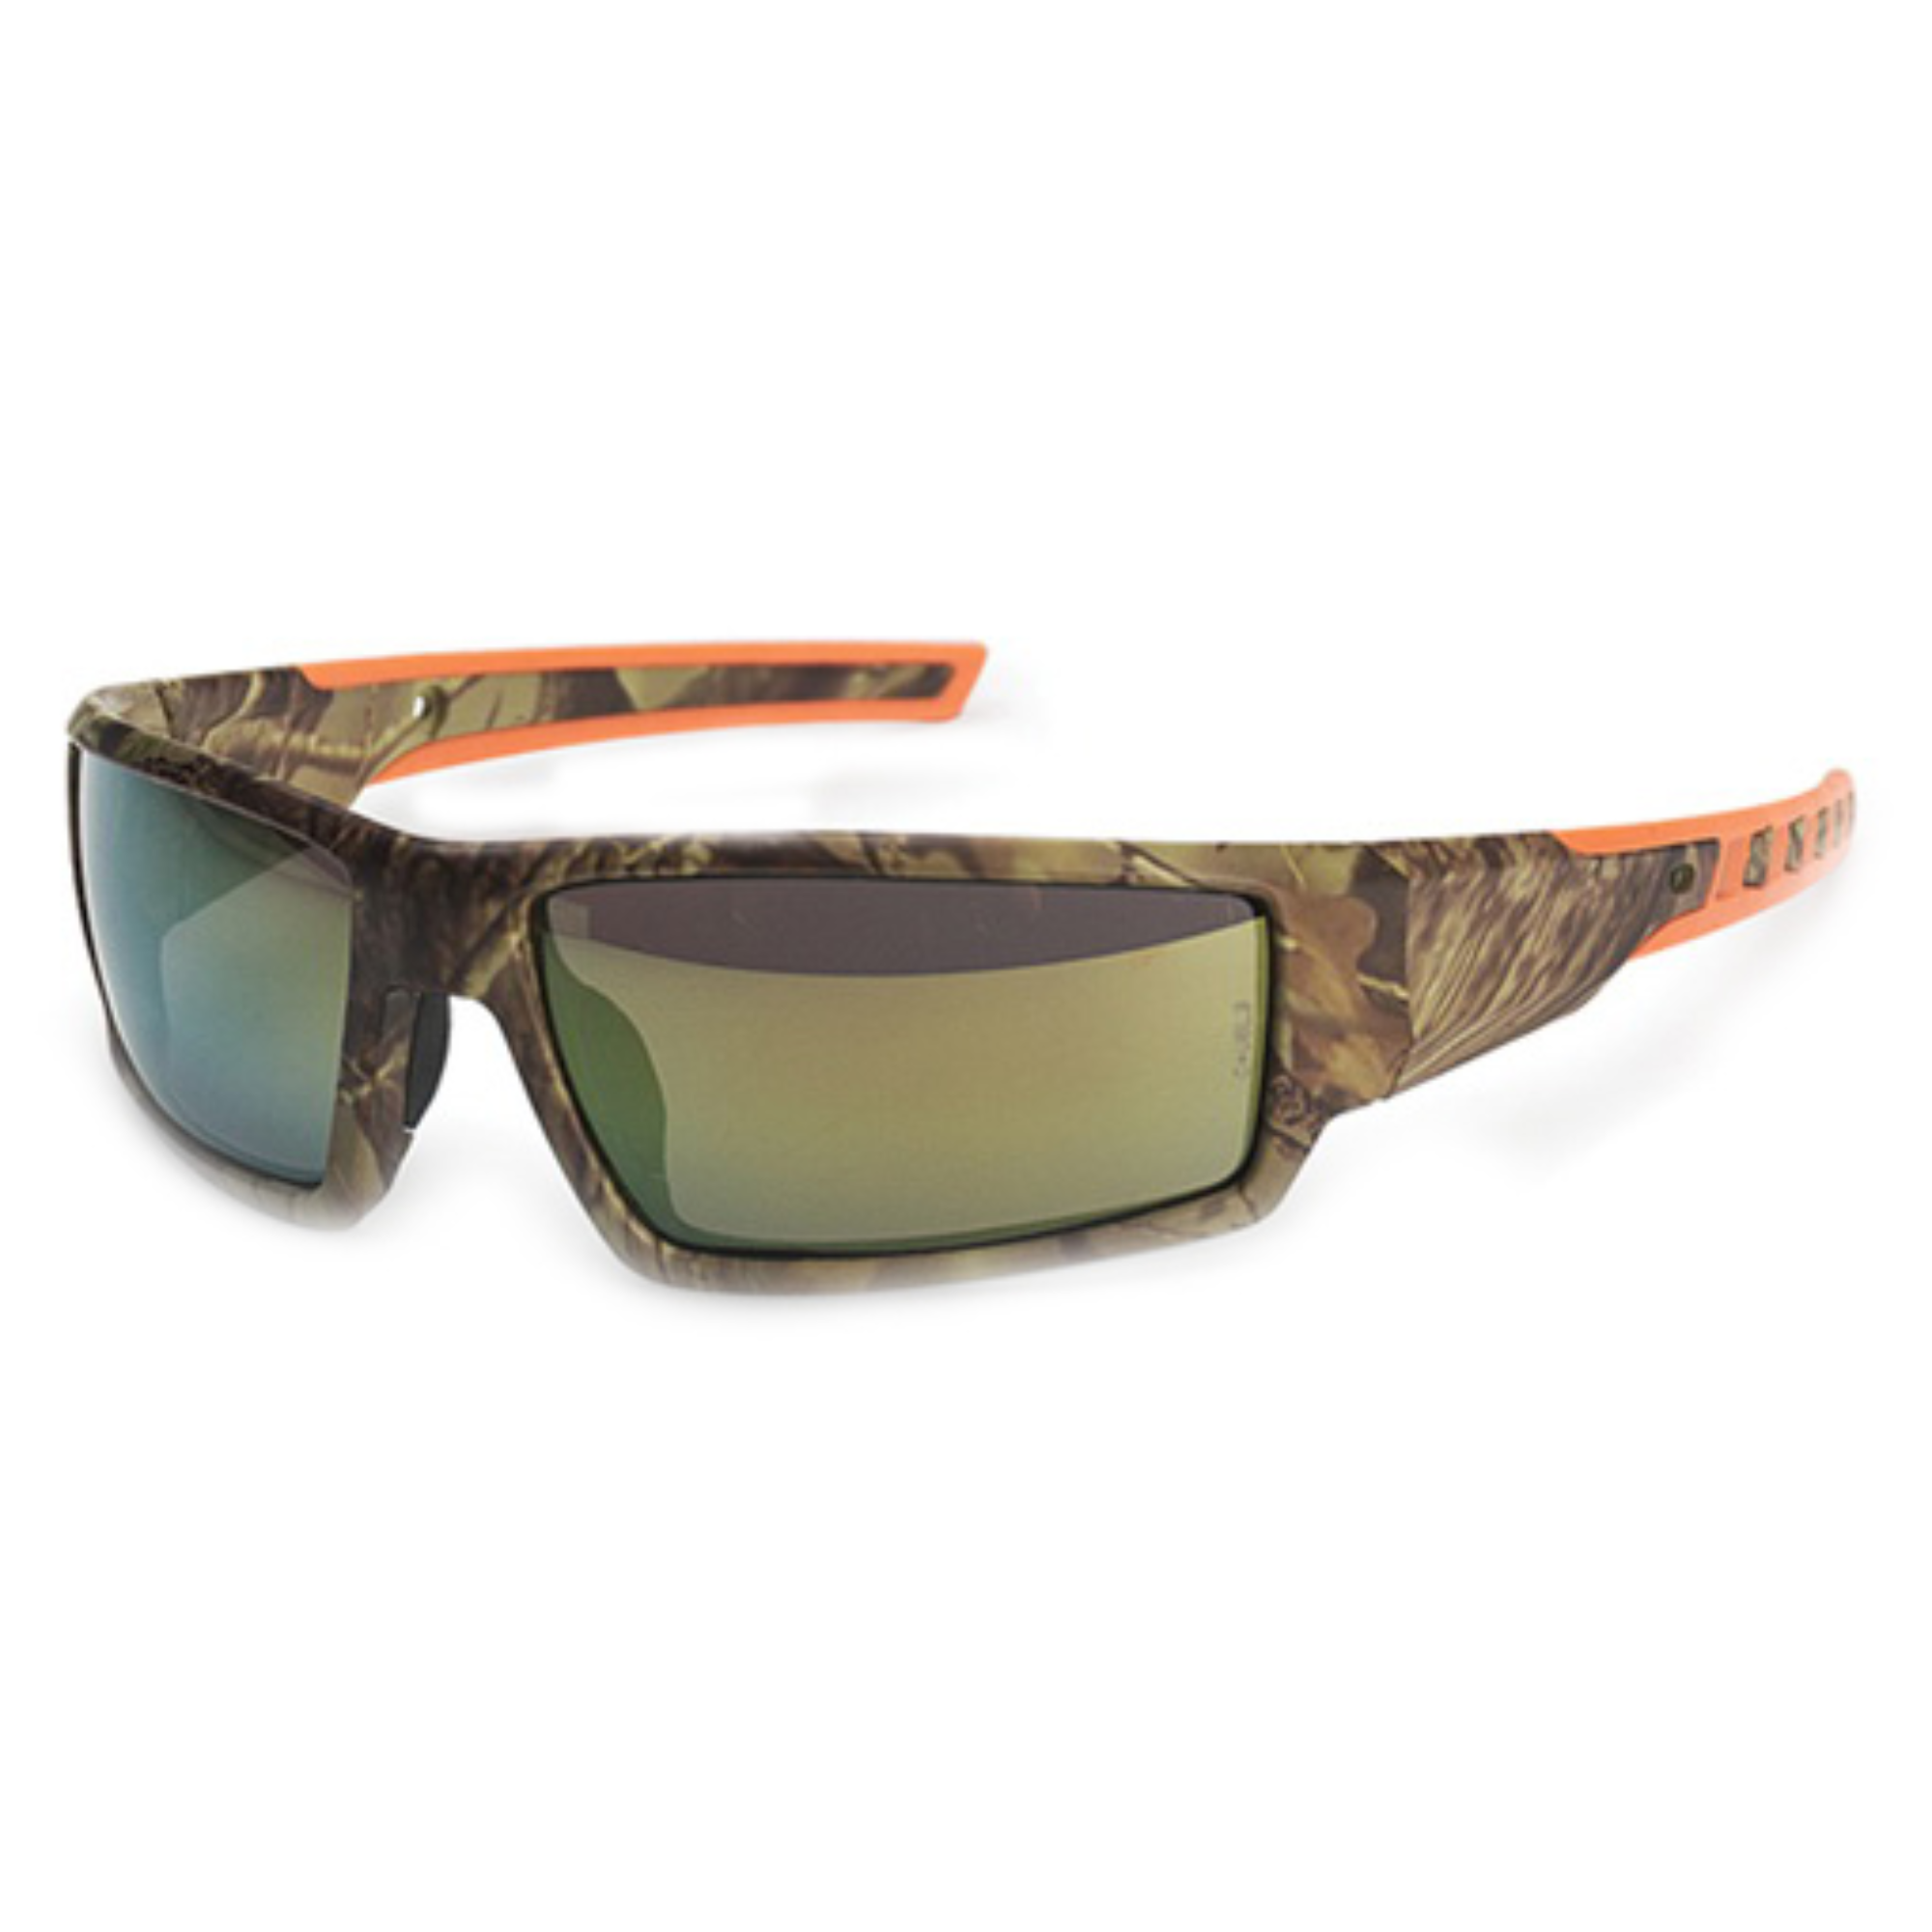 Stihl Hunter's Camo Glasses - UV Protection | 7010 884 0389